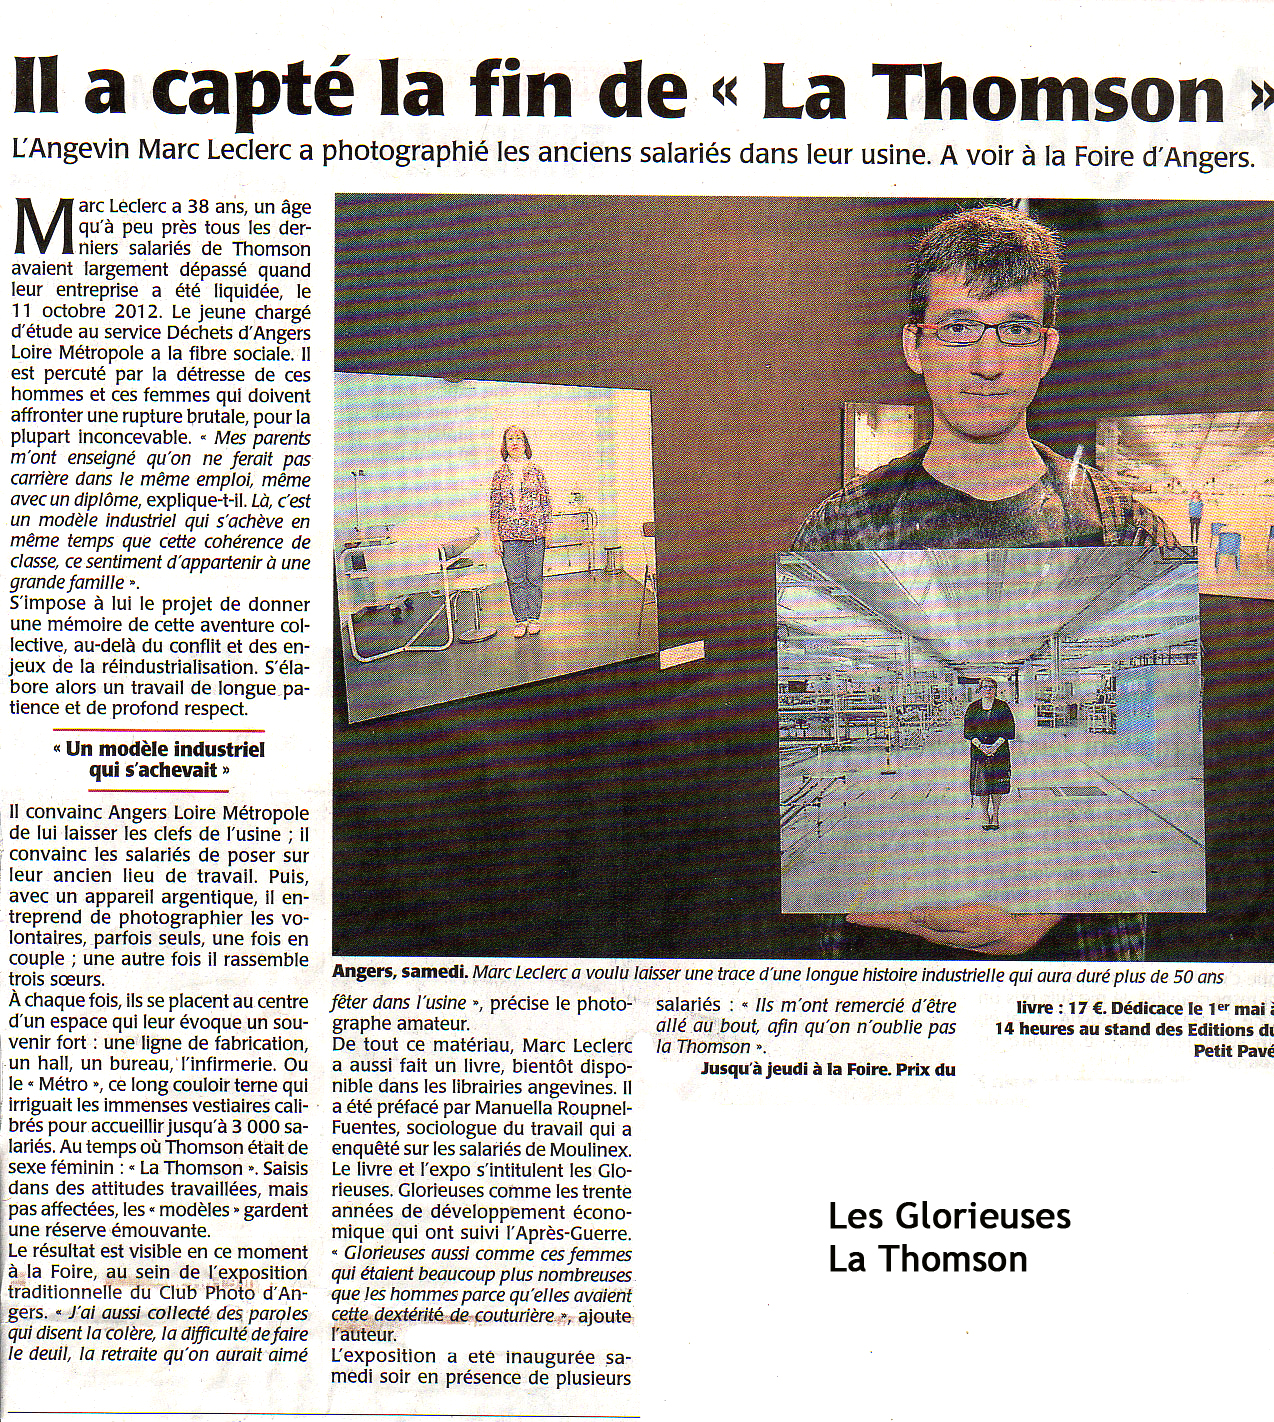 Les Glorieuses - La Thomson - Photo thomson-article.jpg